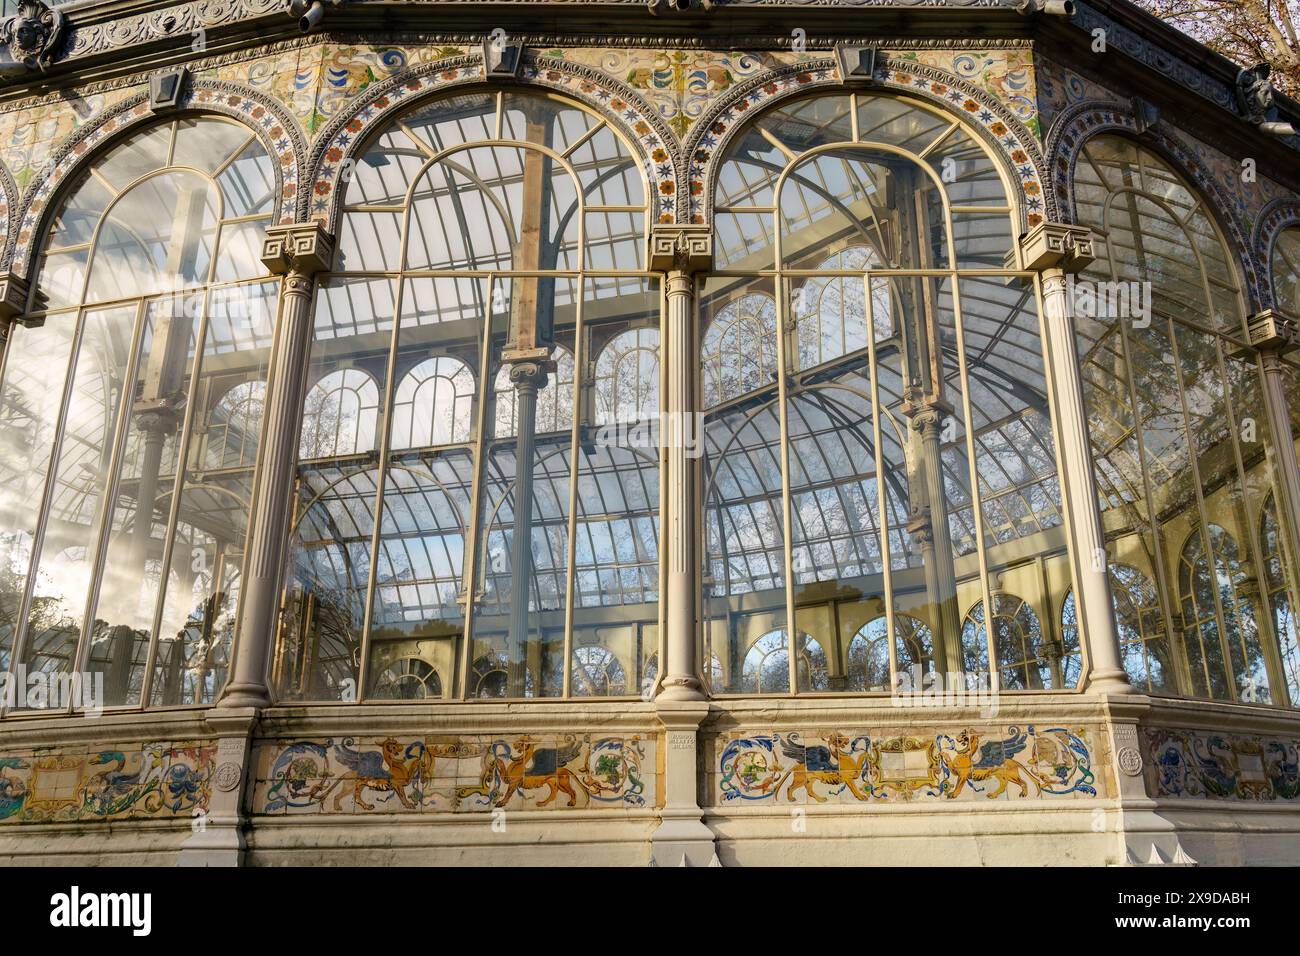 Ornate windows of Palacio de Cristal, The Glass Palace in El Retiro Park, Madrid, Spain Stock Photo